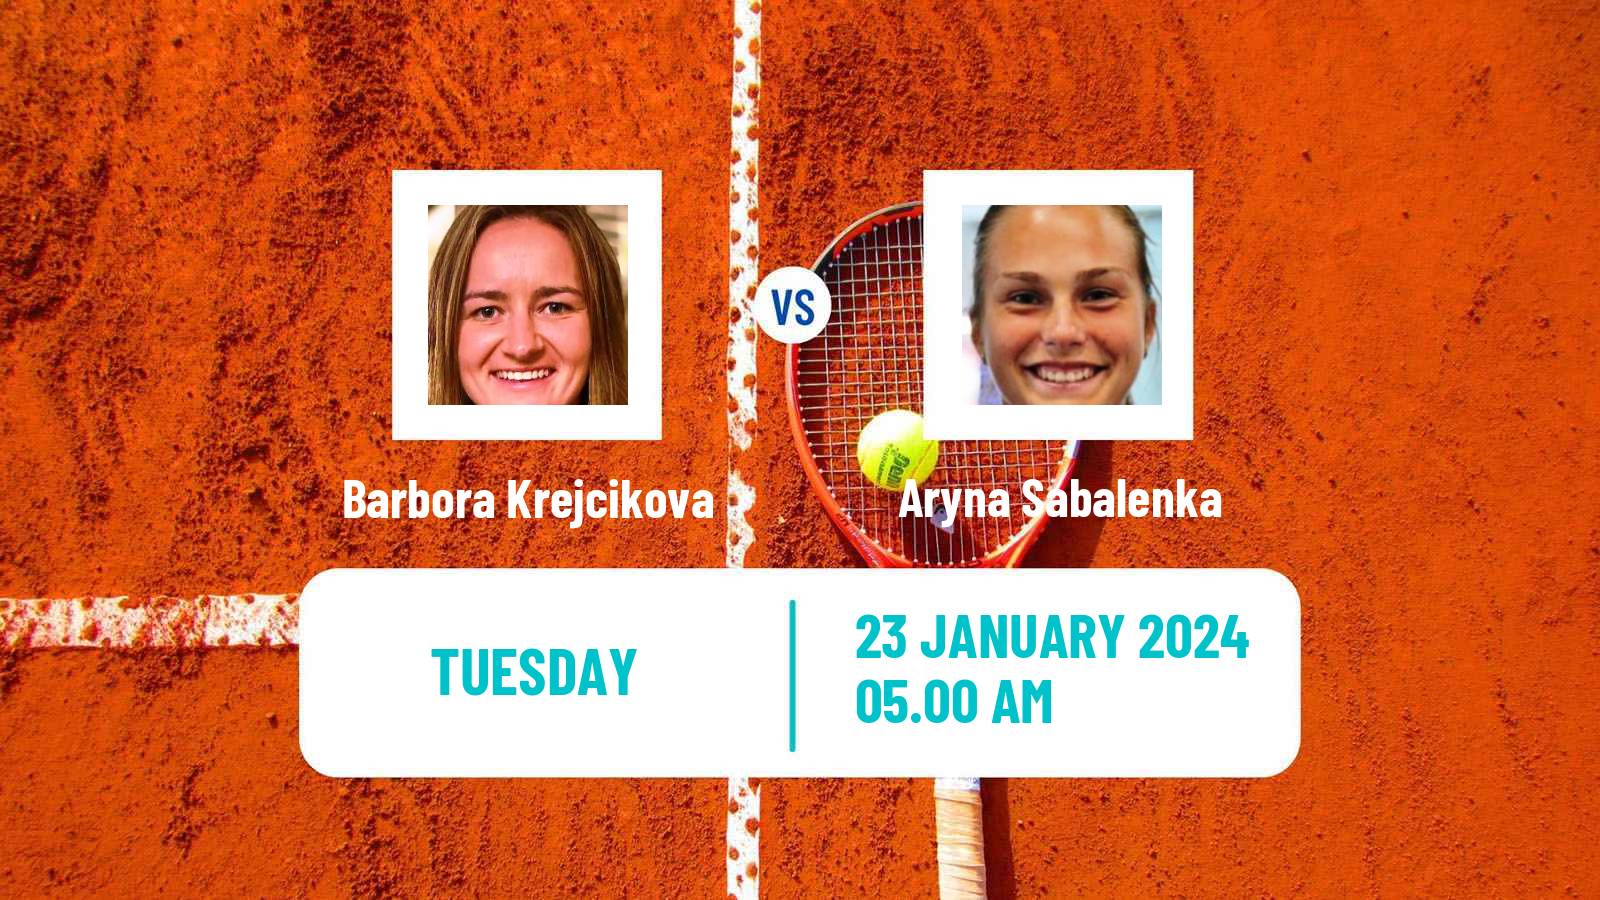 Tennis WTA Australian Open Barbora Krejcikova - Aryna Sabalenka